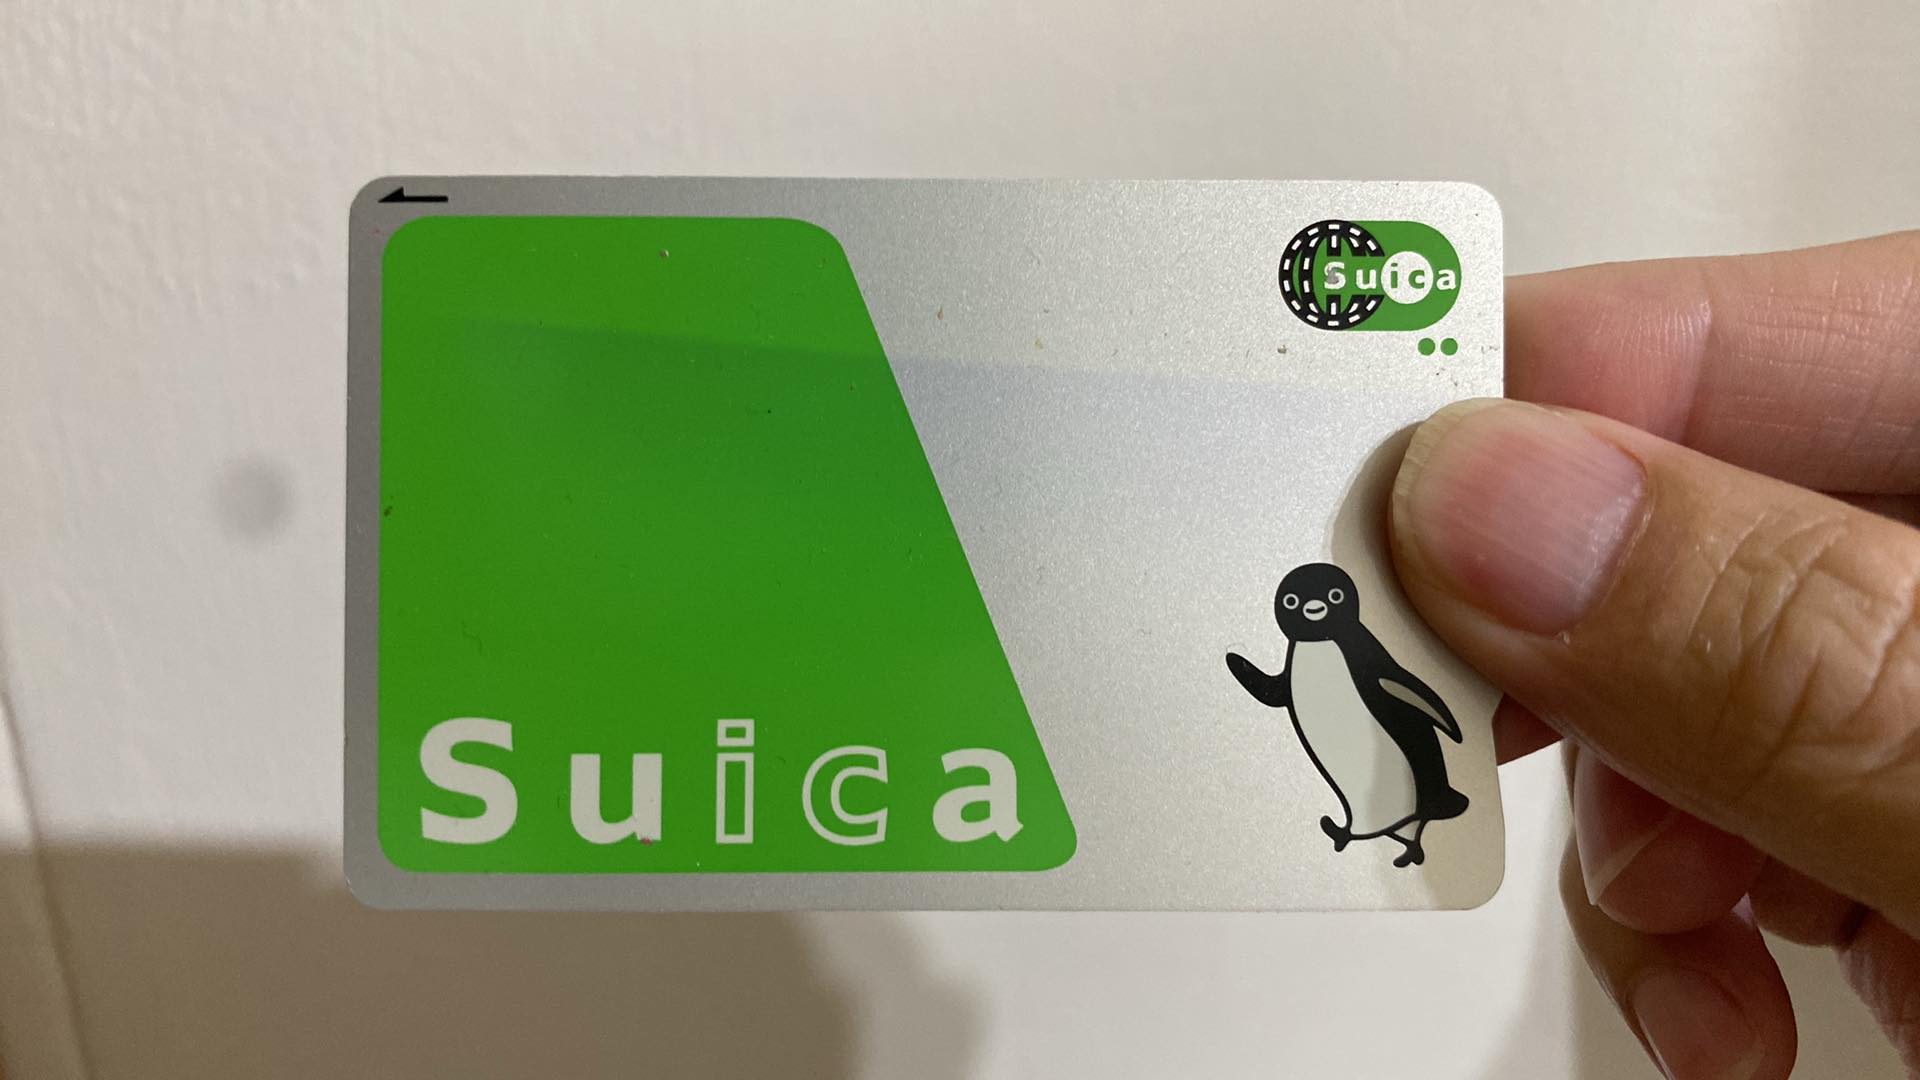 15年前的 Suica card